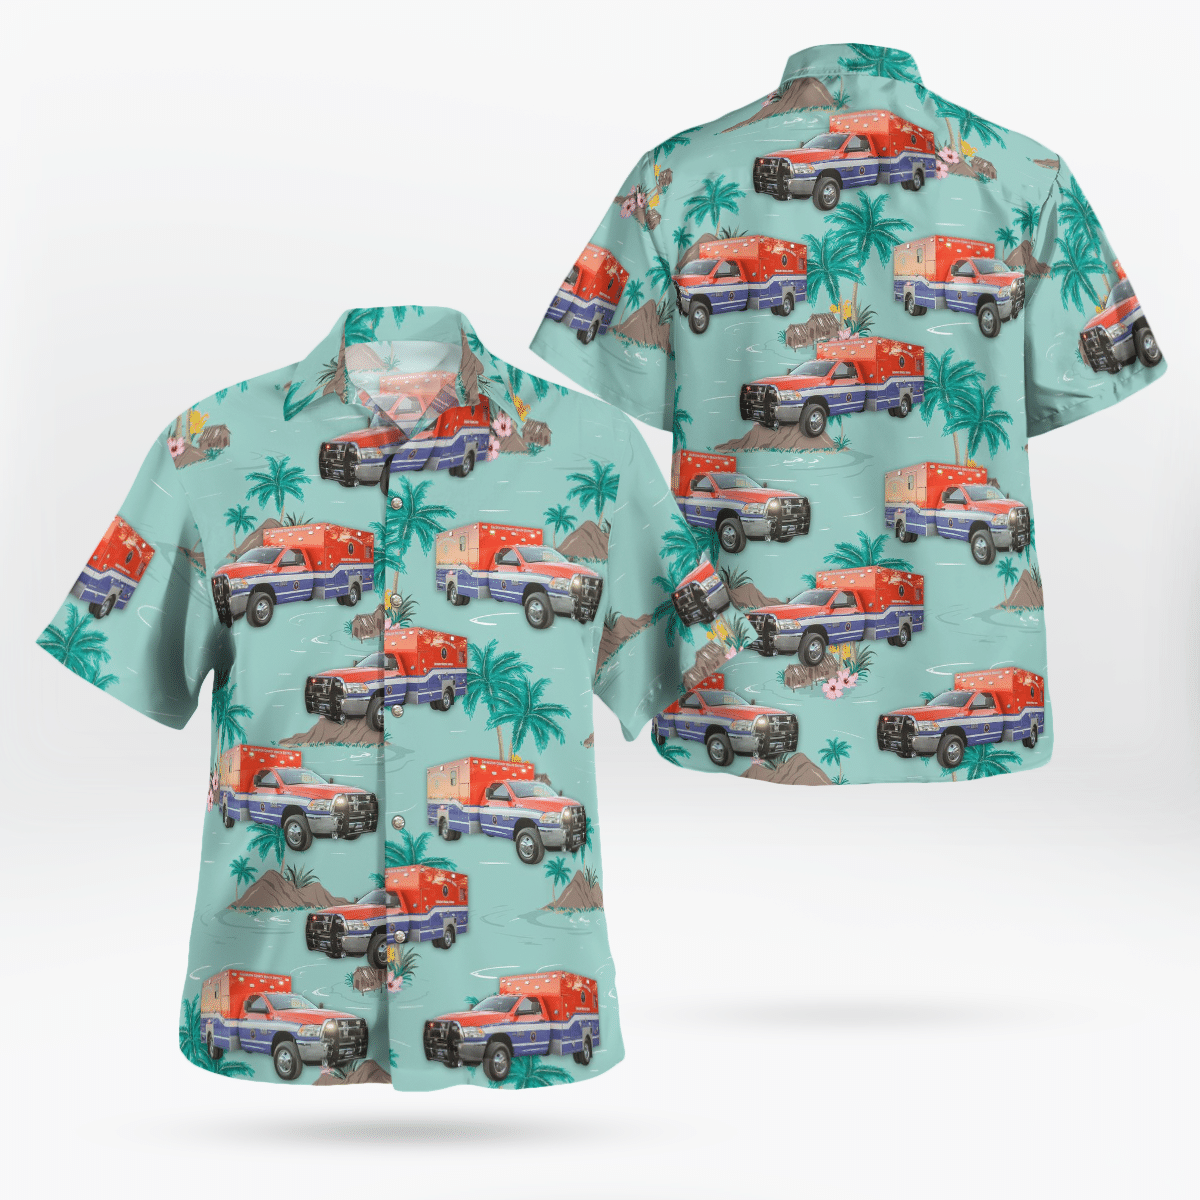 Listed below are some High-quality Aloha Shirt 411